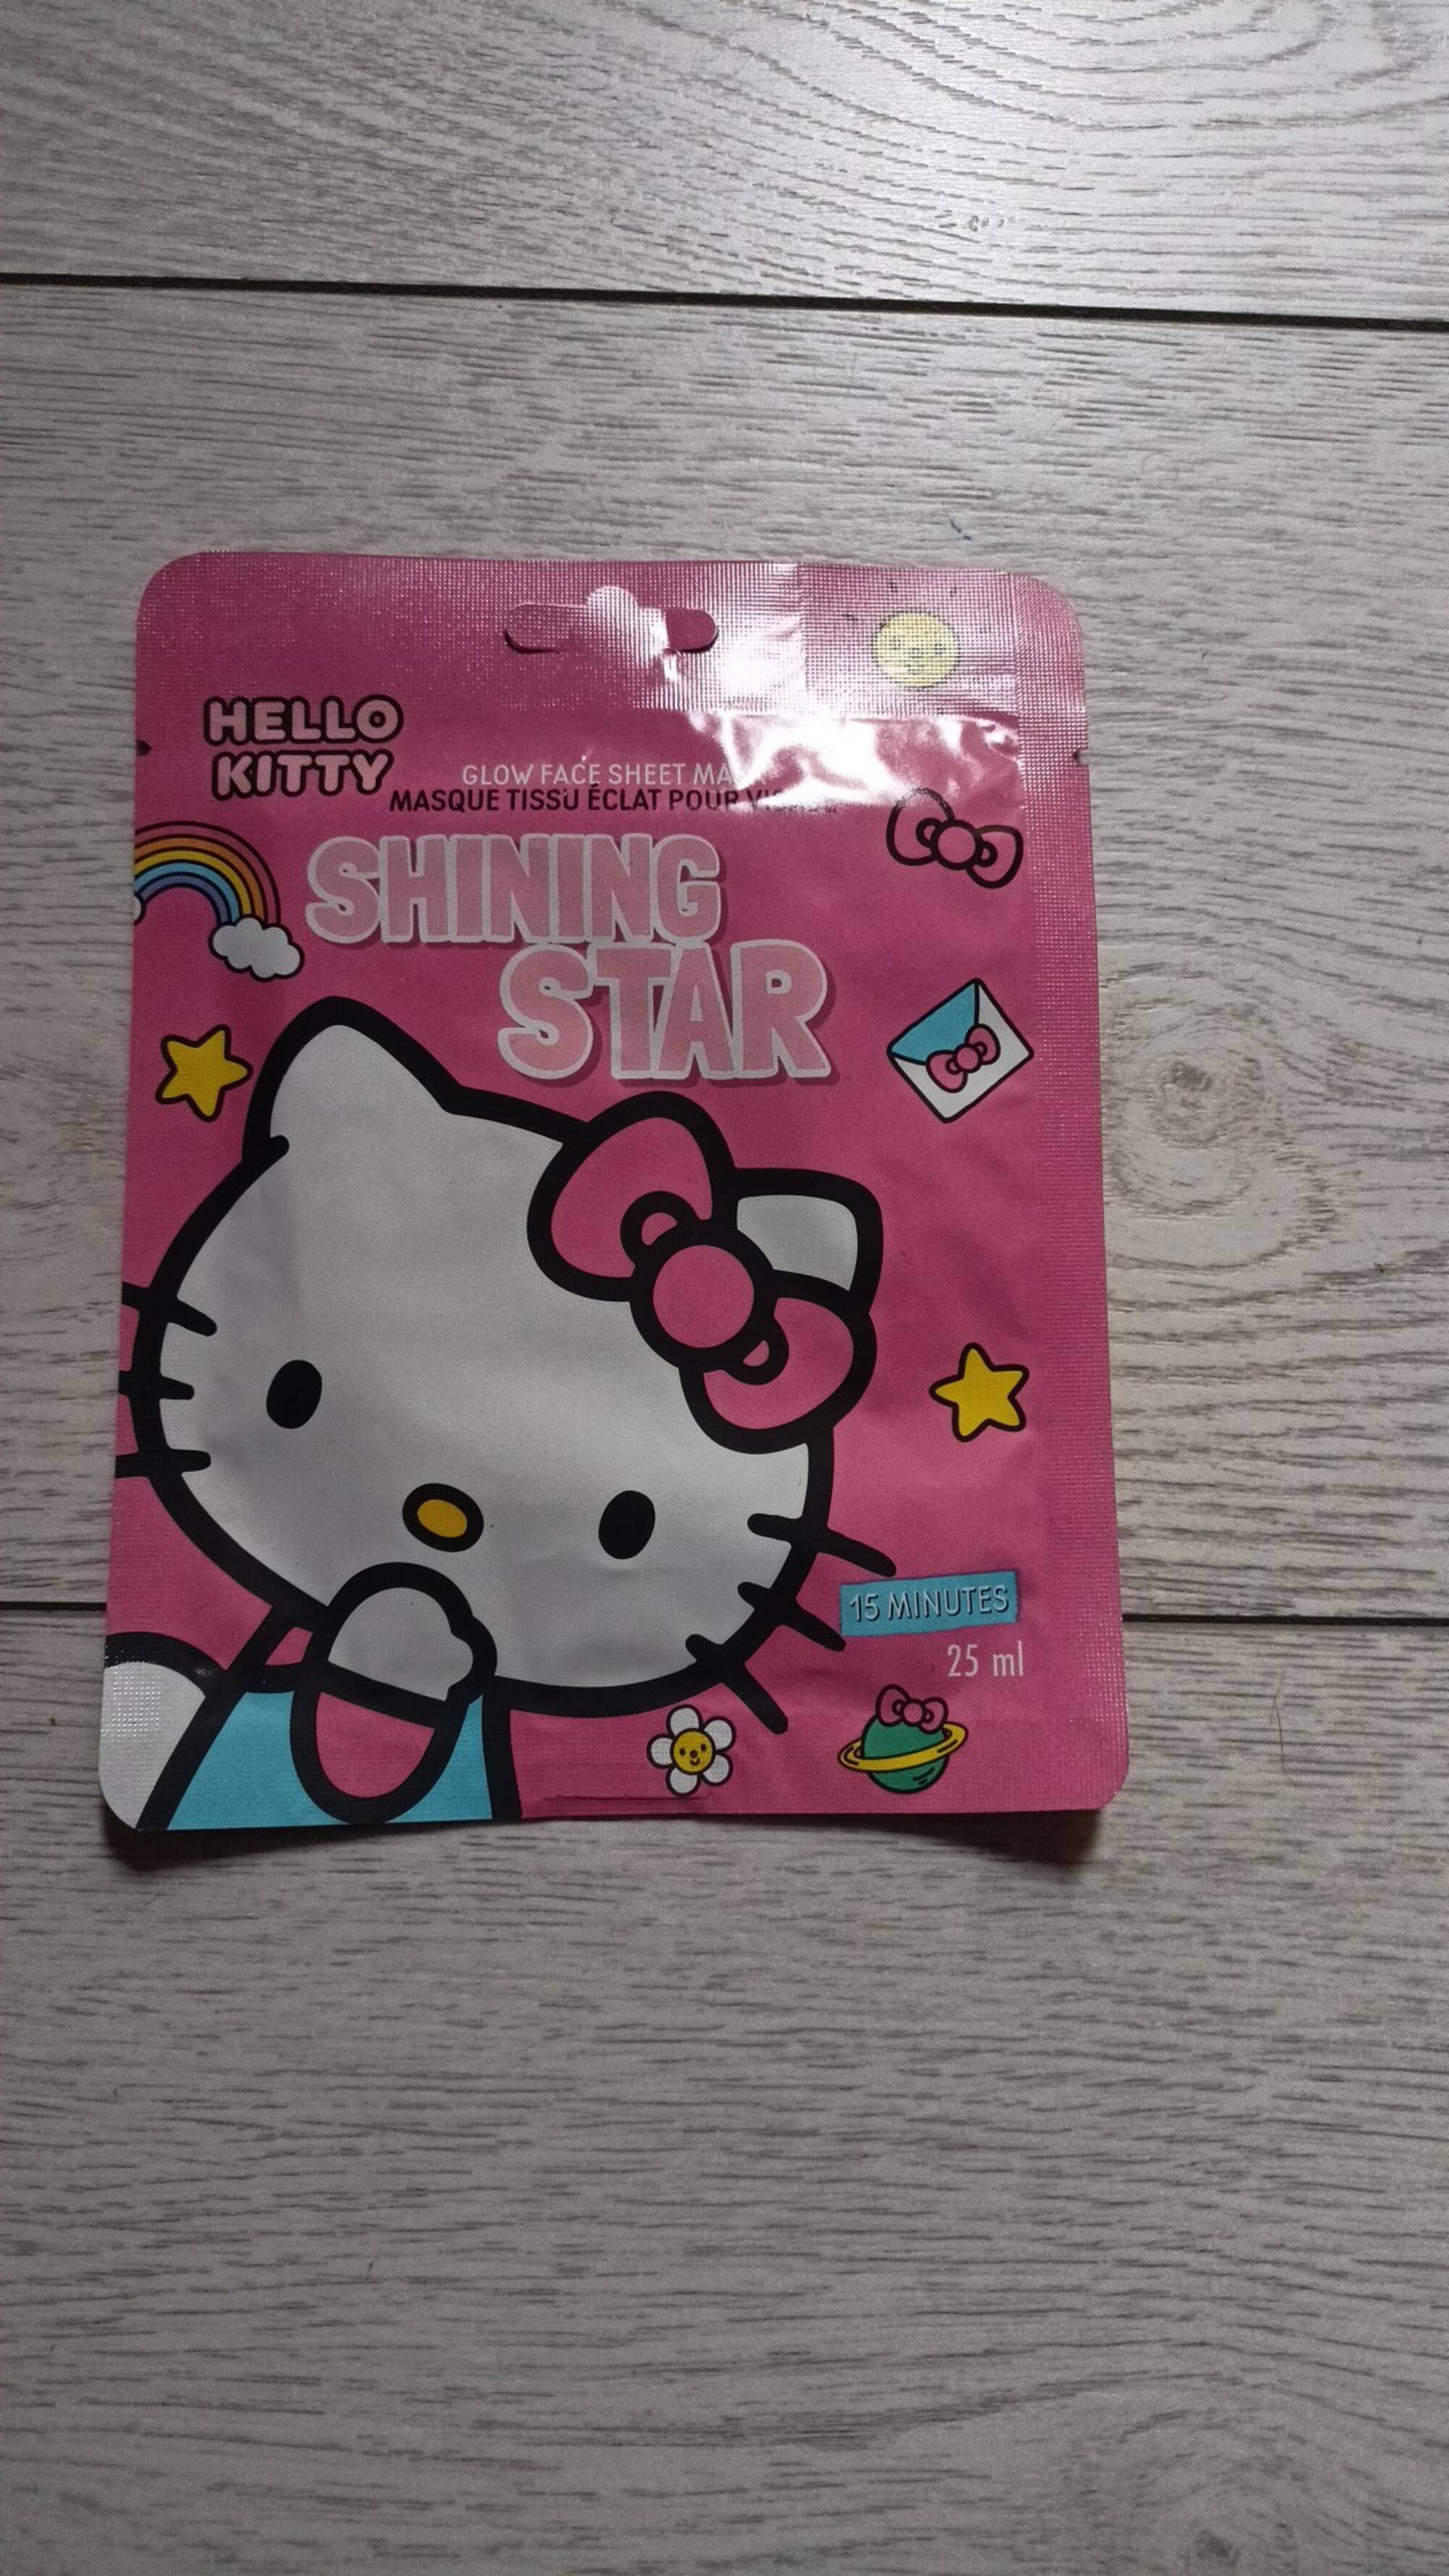 HELLO KITTY - Shining star - Masque tissu éclat pour visage